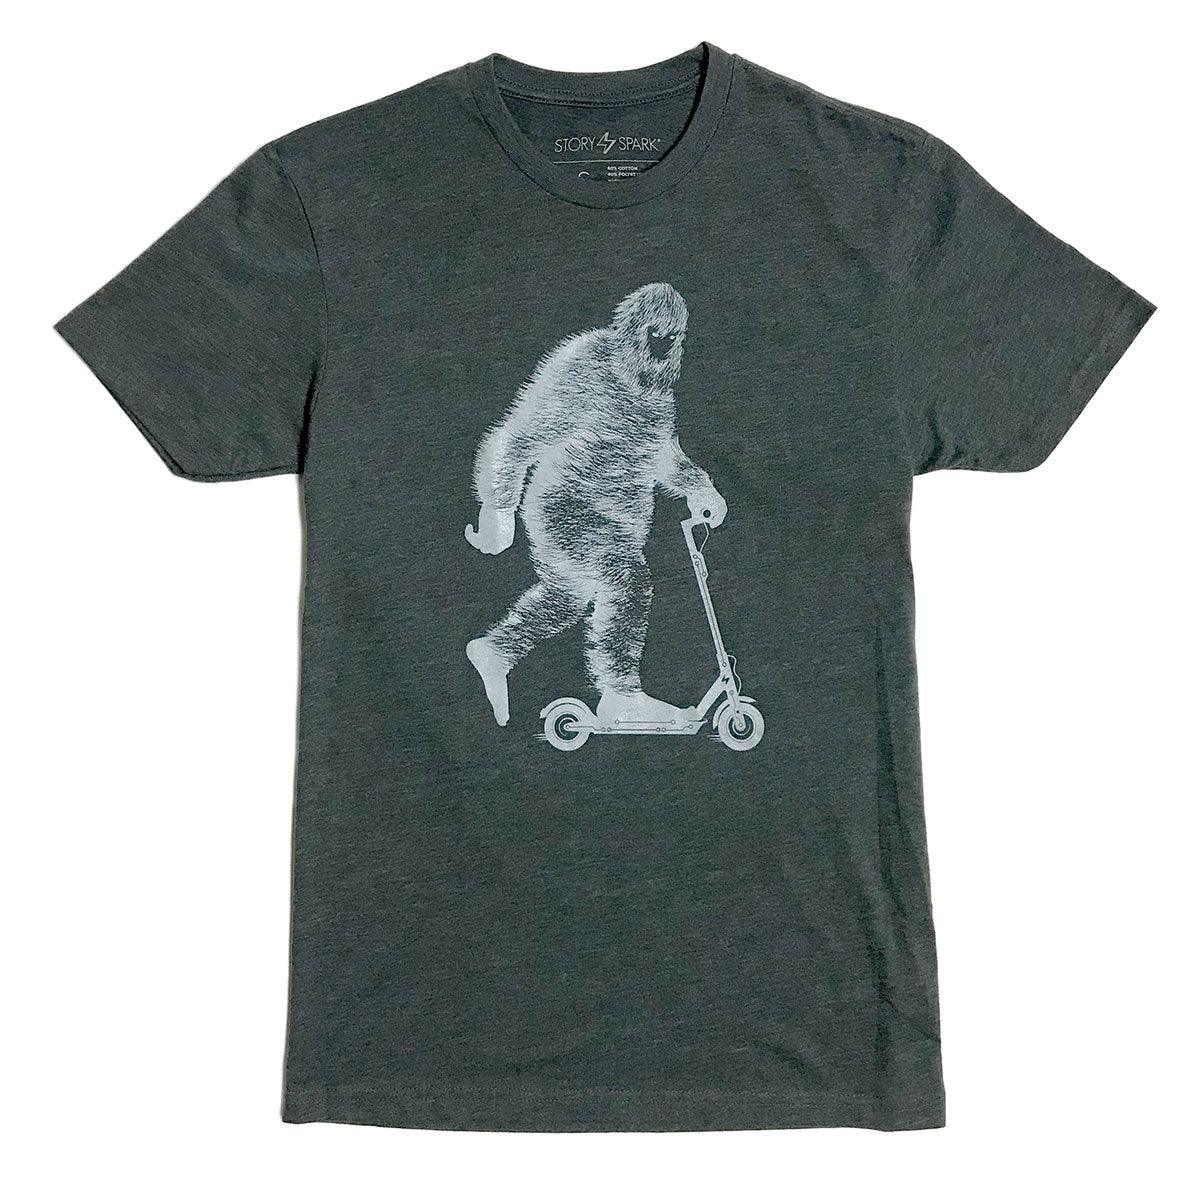 Bigfoot Graphic T-shirt - Glow in the Dark Yeti Tee by STORY SPARK